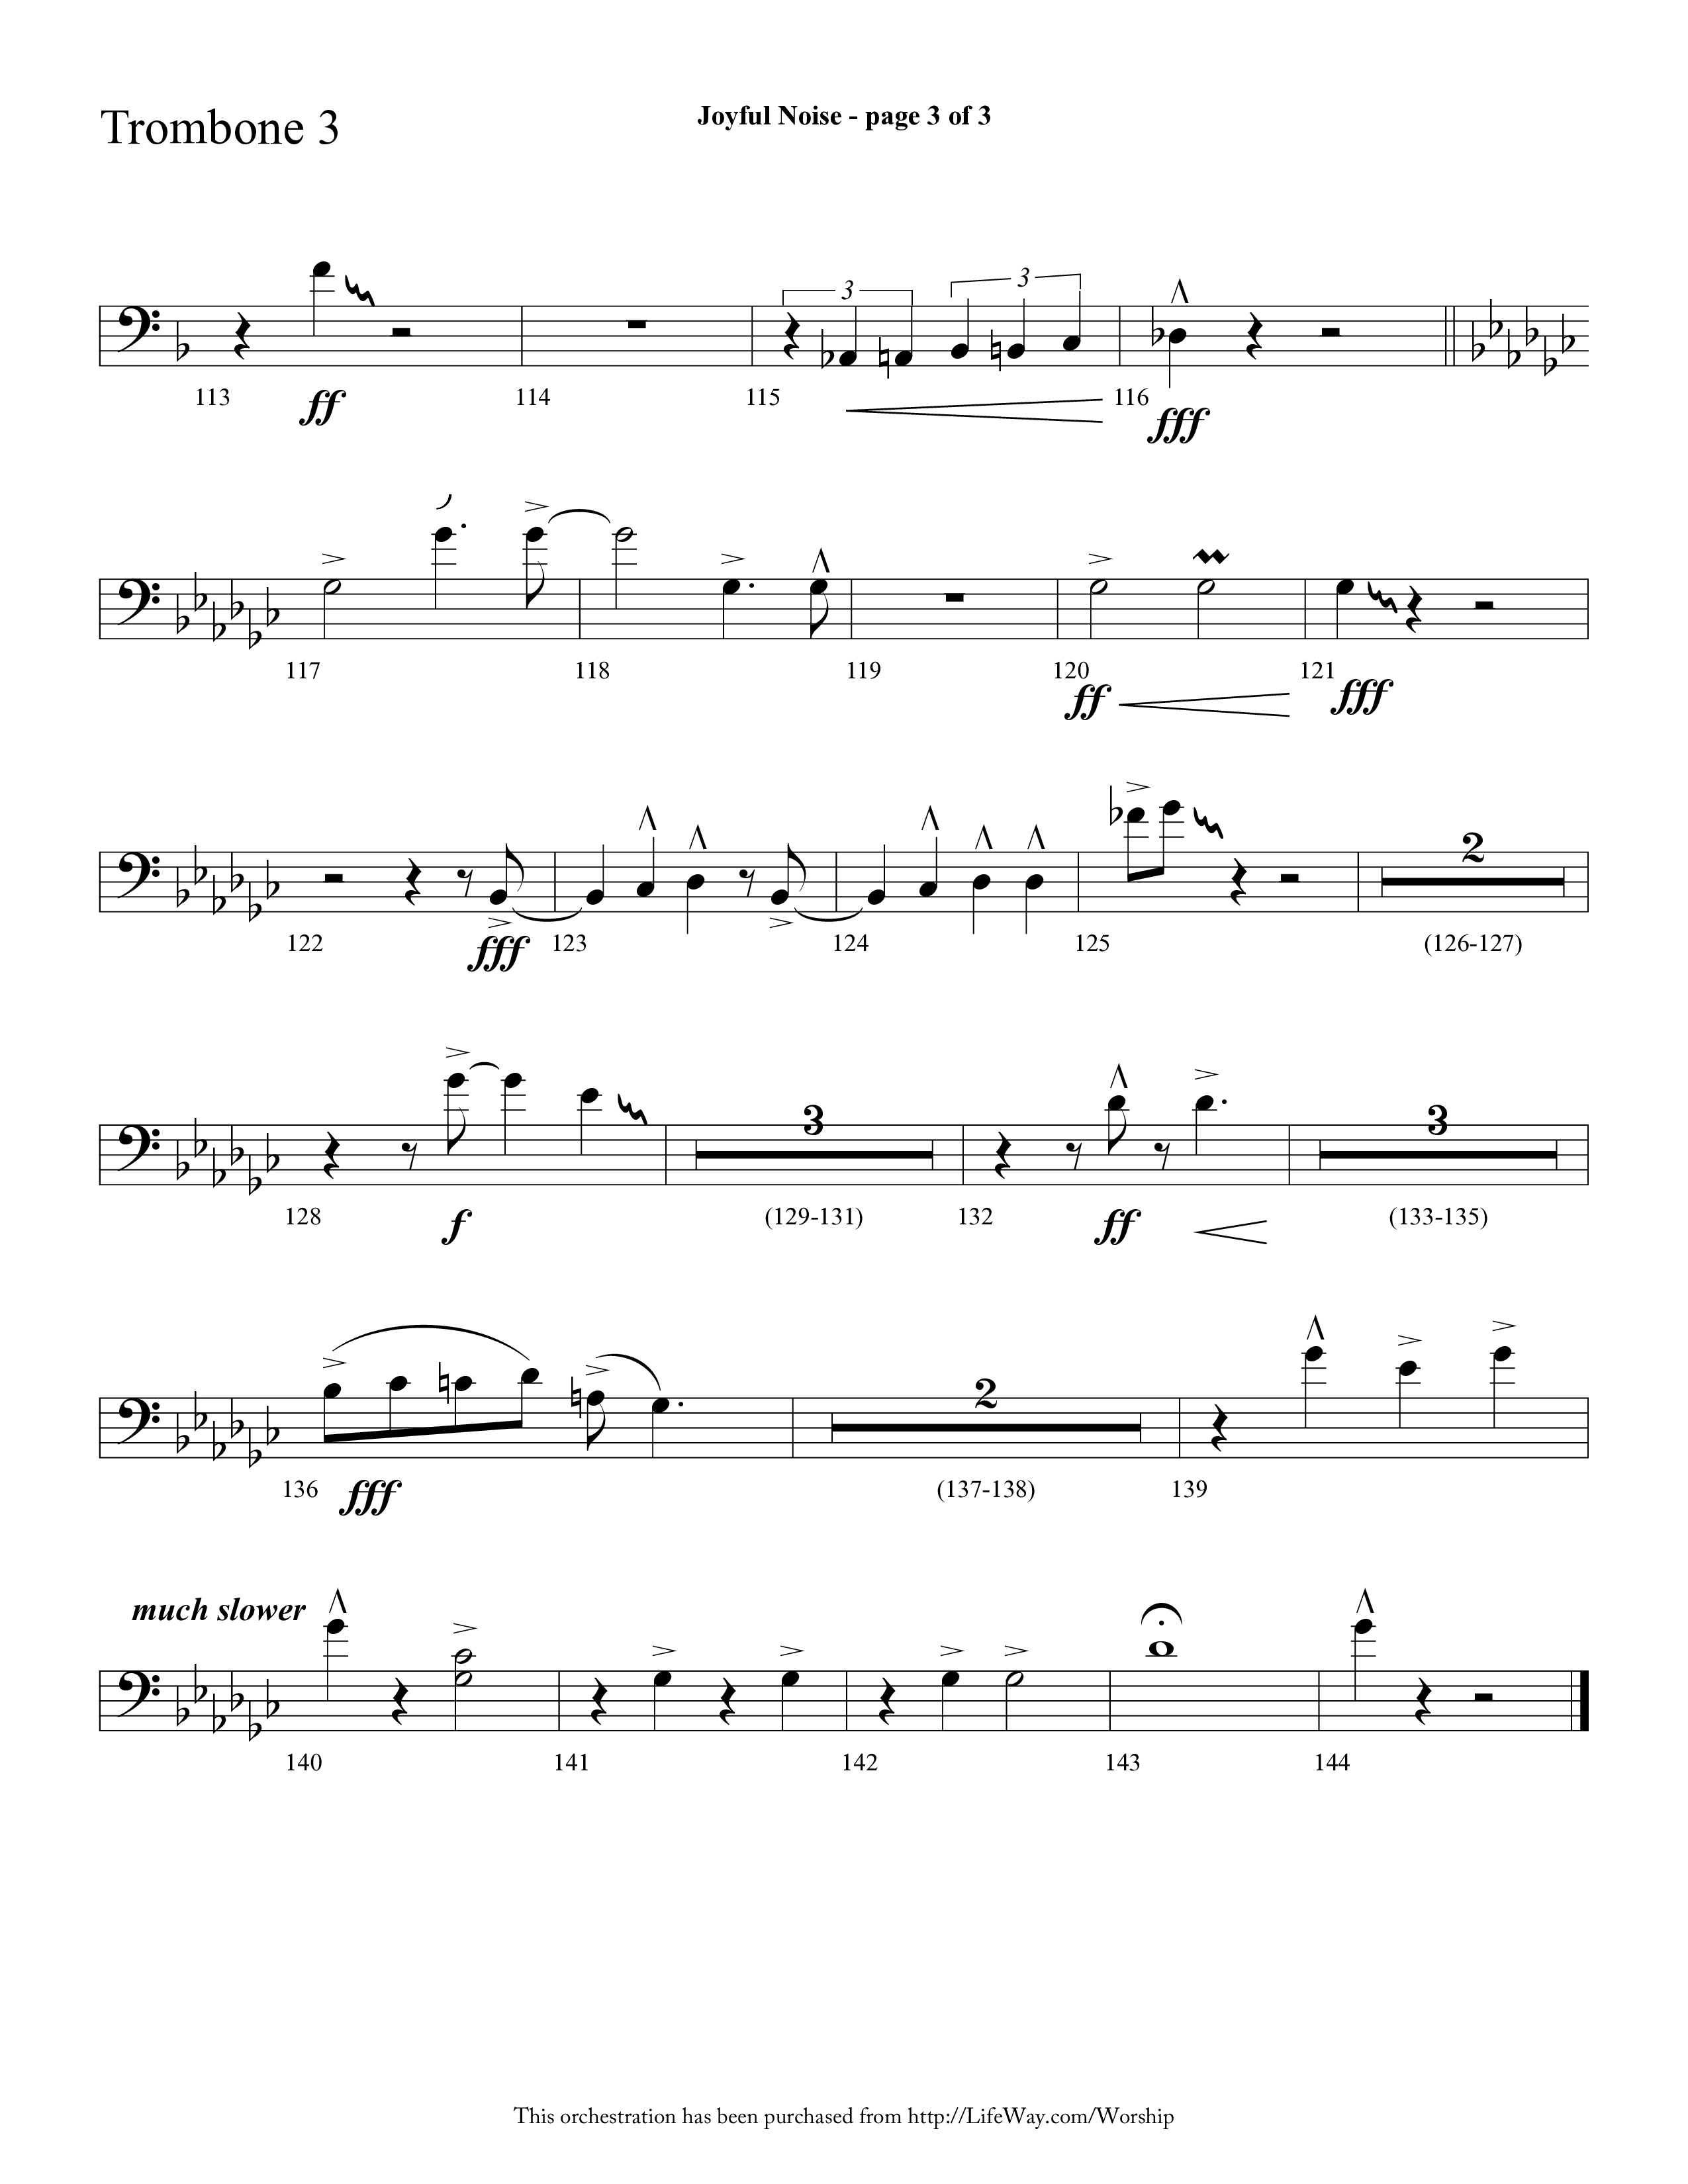 Joyful Noise (Choral Anthem SATB) Trombone 3 (Lifeway Choral / Arr. Cliff Duren)